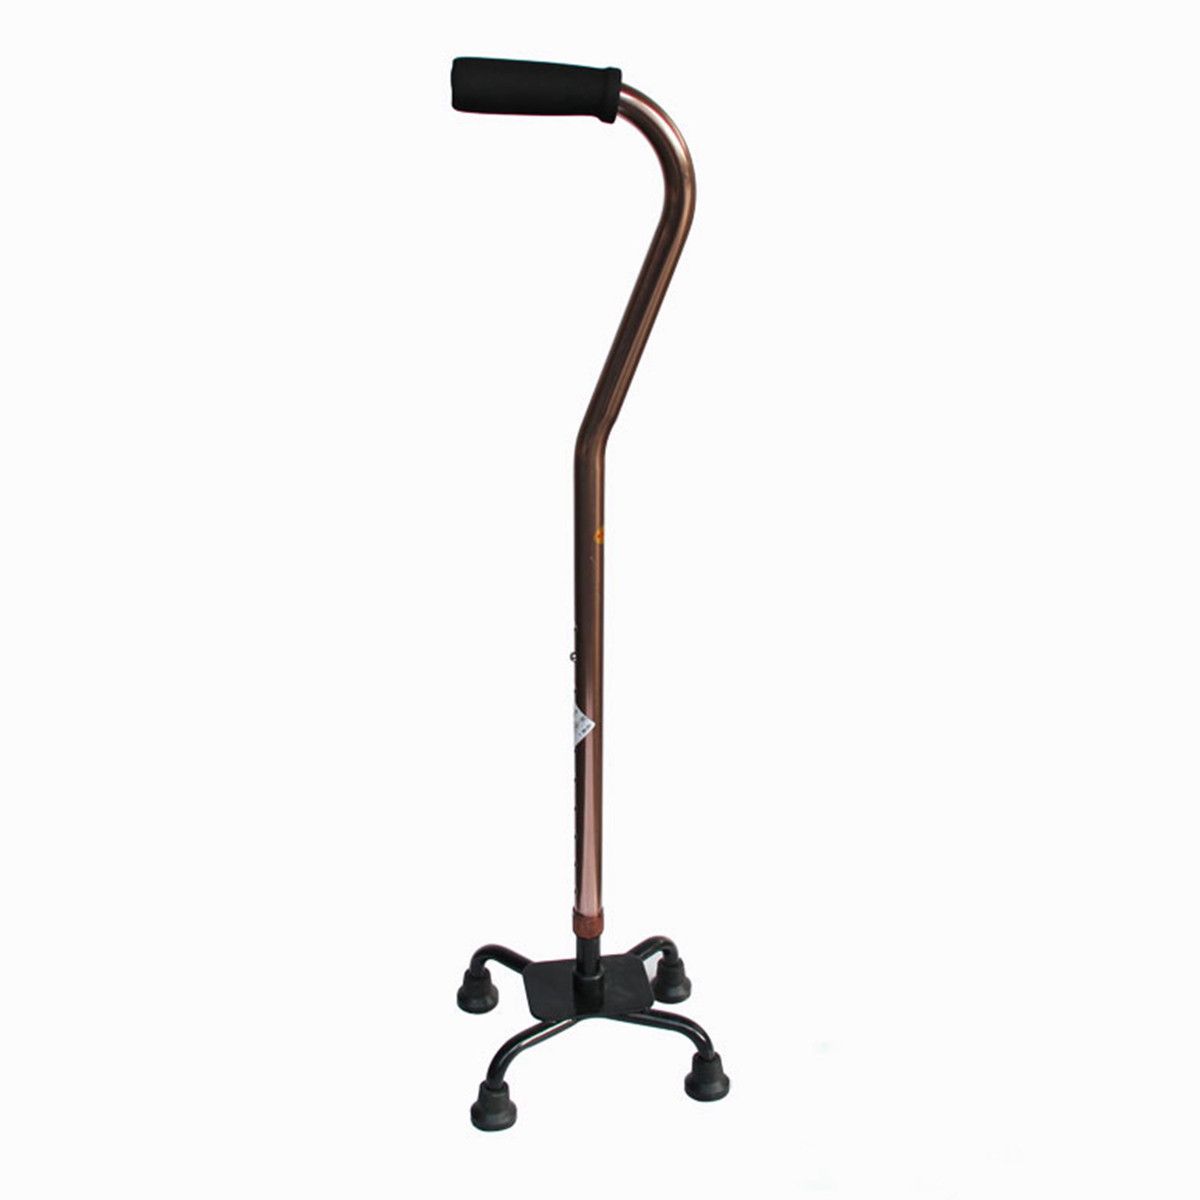 19mm-Black-Rubber-Crutch-Skid-Mat-Tables-Chairs-Mats-1036431